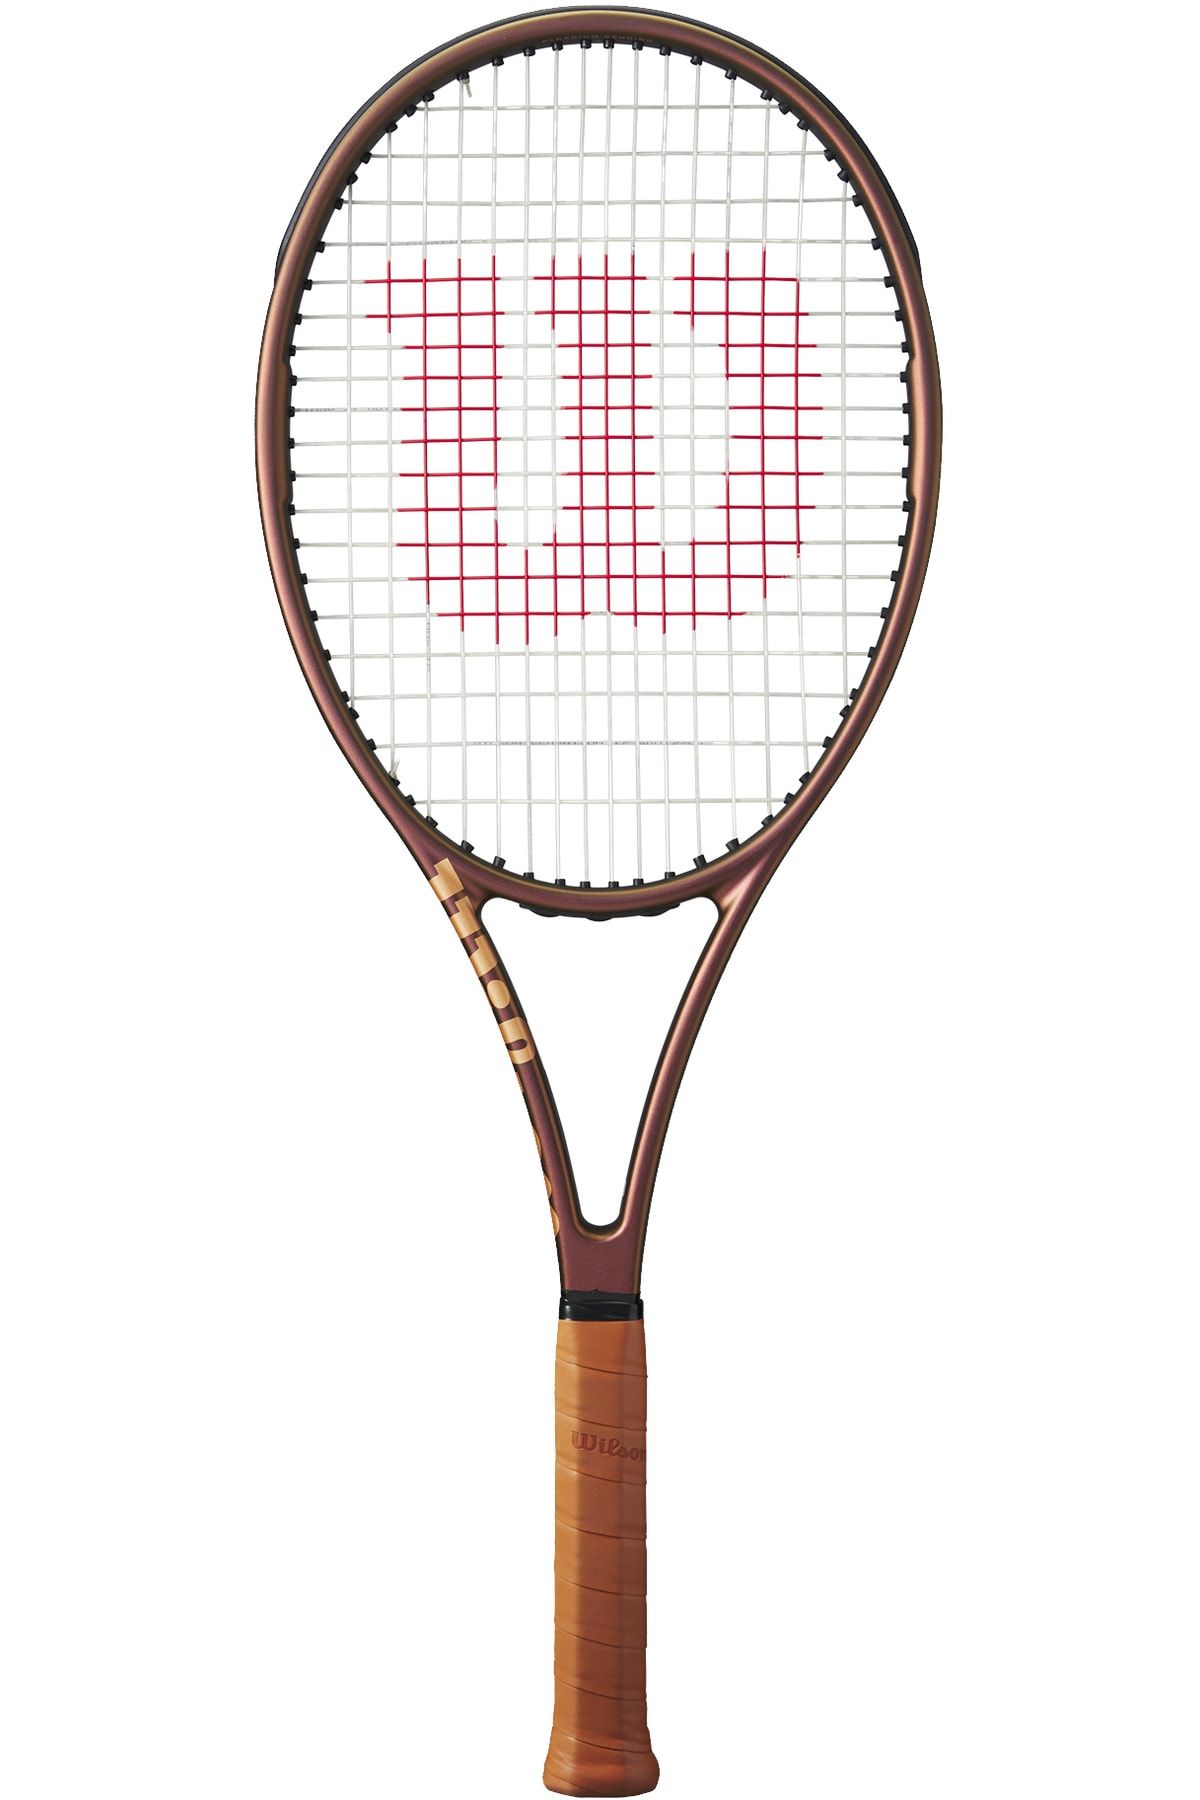 Wilson Pro Staff 97 v14 Tenis Raketi (Kordajsız)